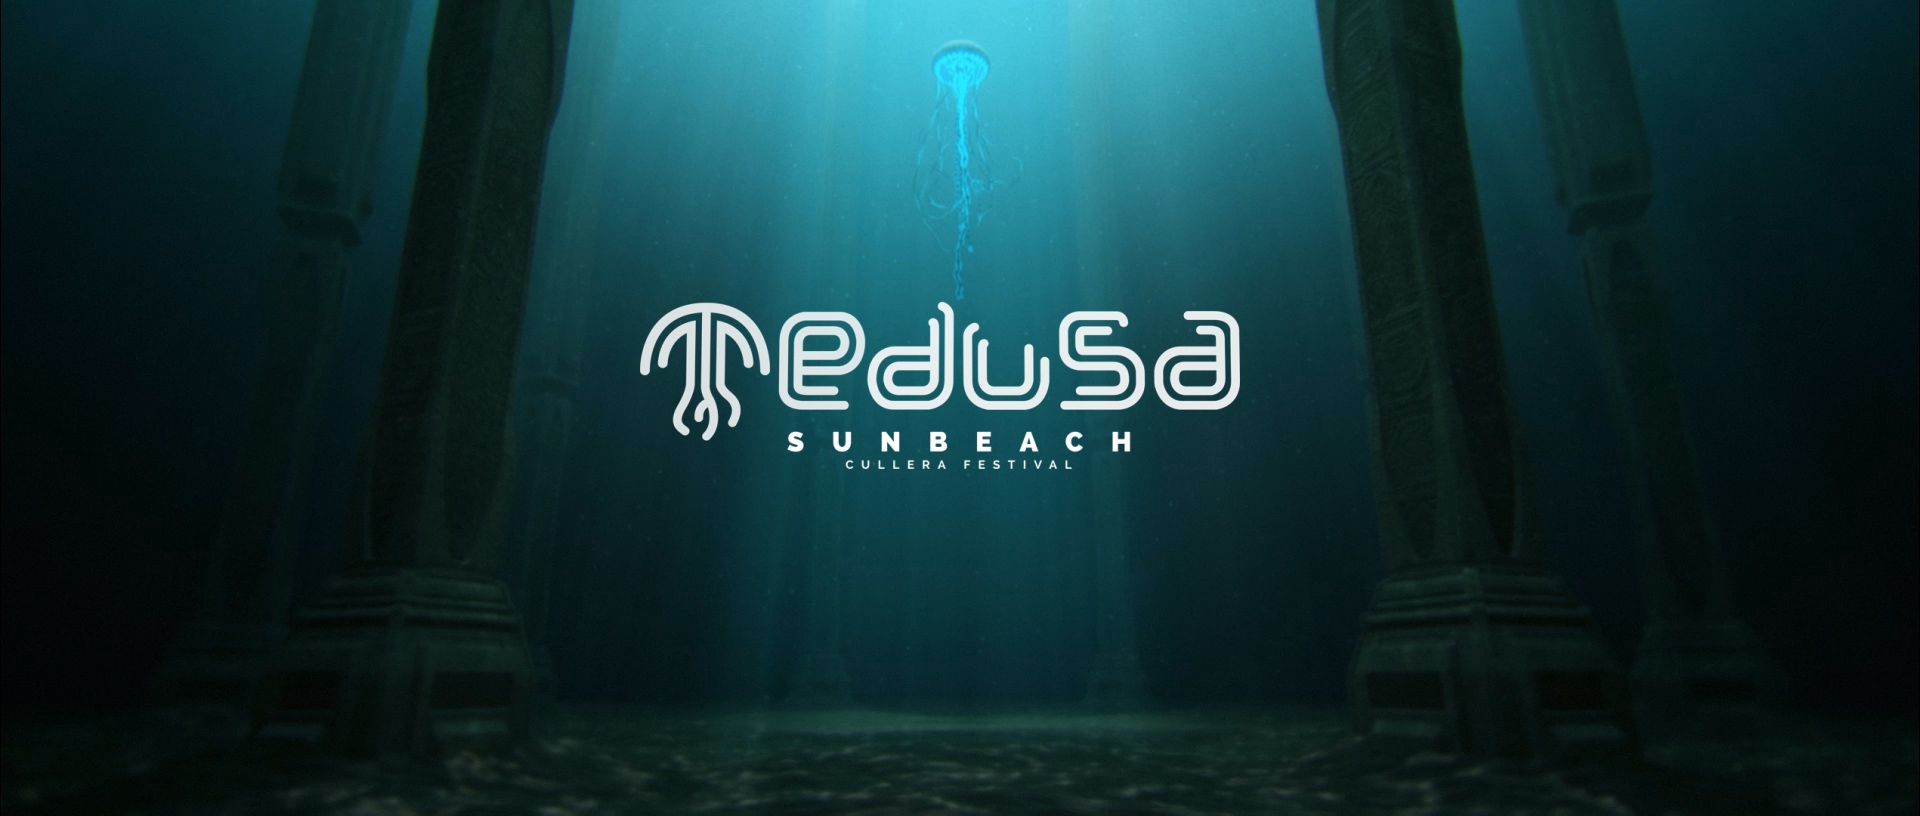 medusa sun beach festival CULLERA -VISUAL ART-ANIMACIÓN 3D